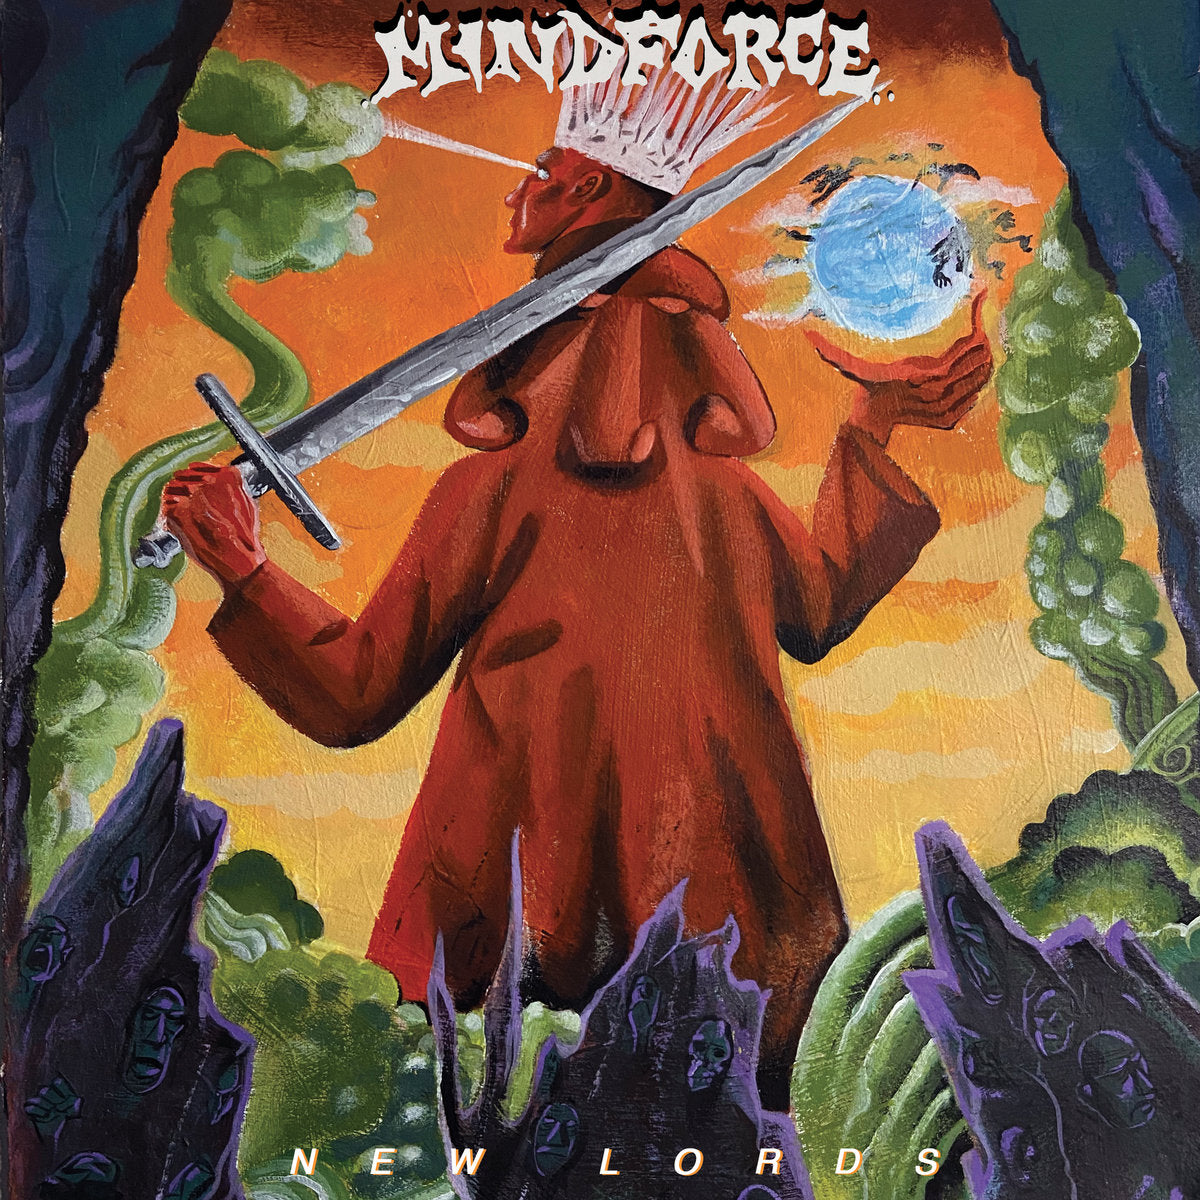 Mindforce "New Lords" CD